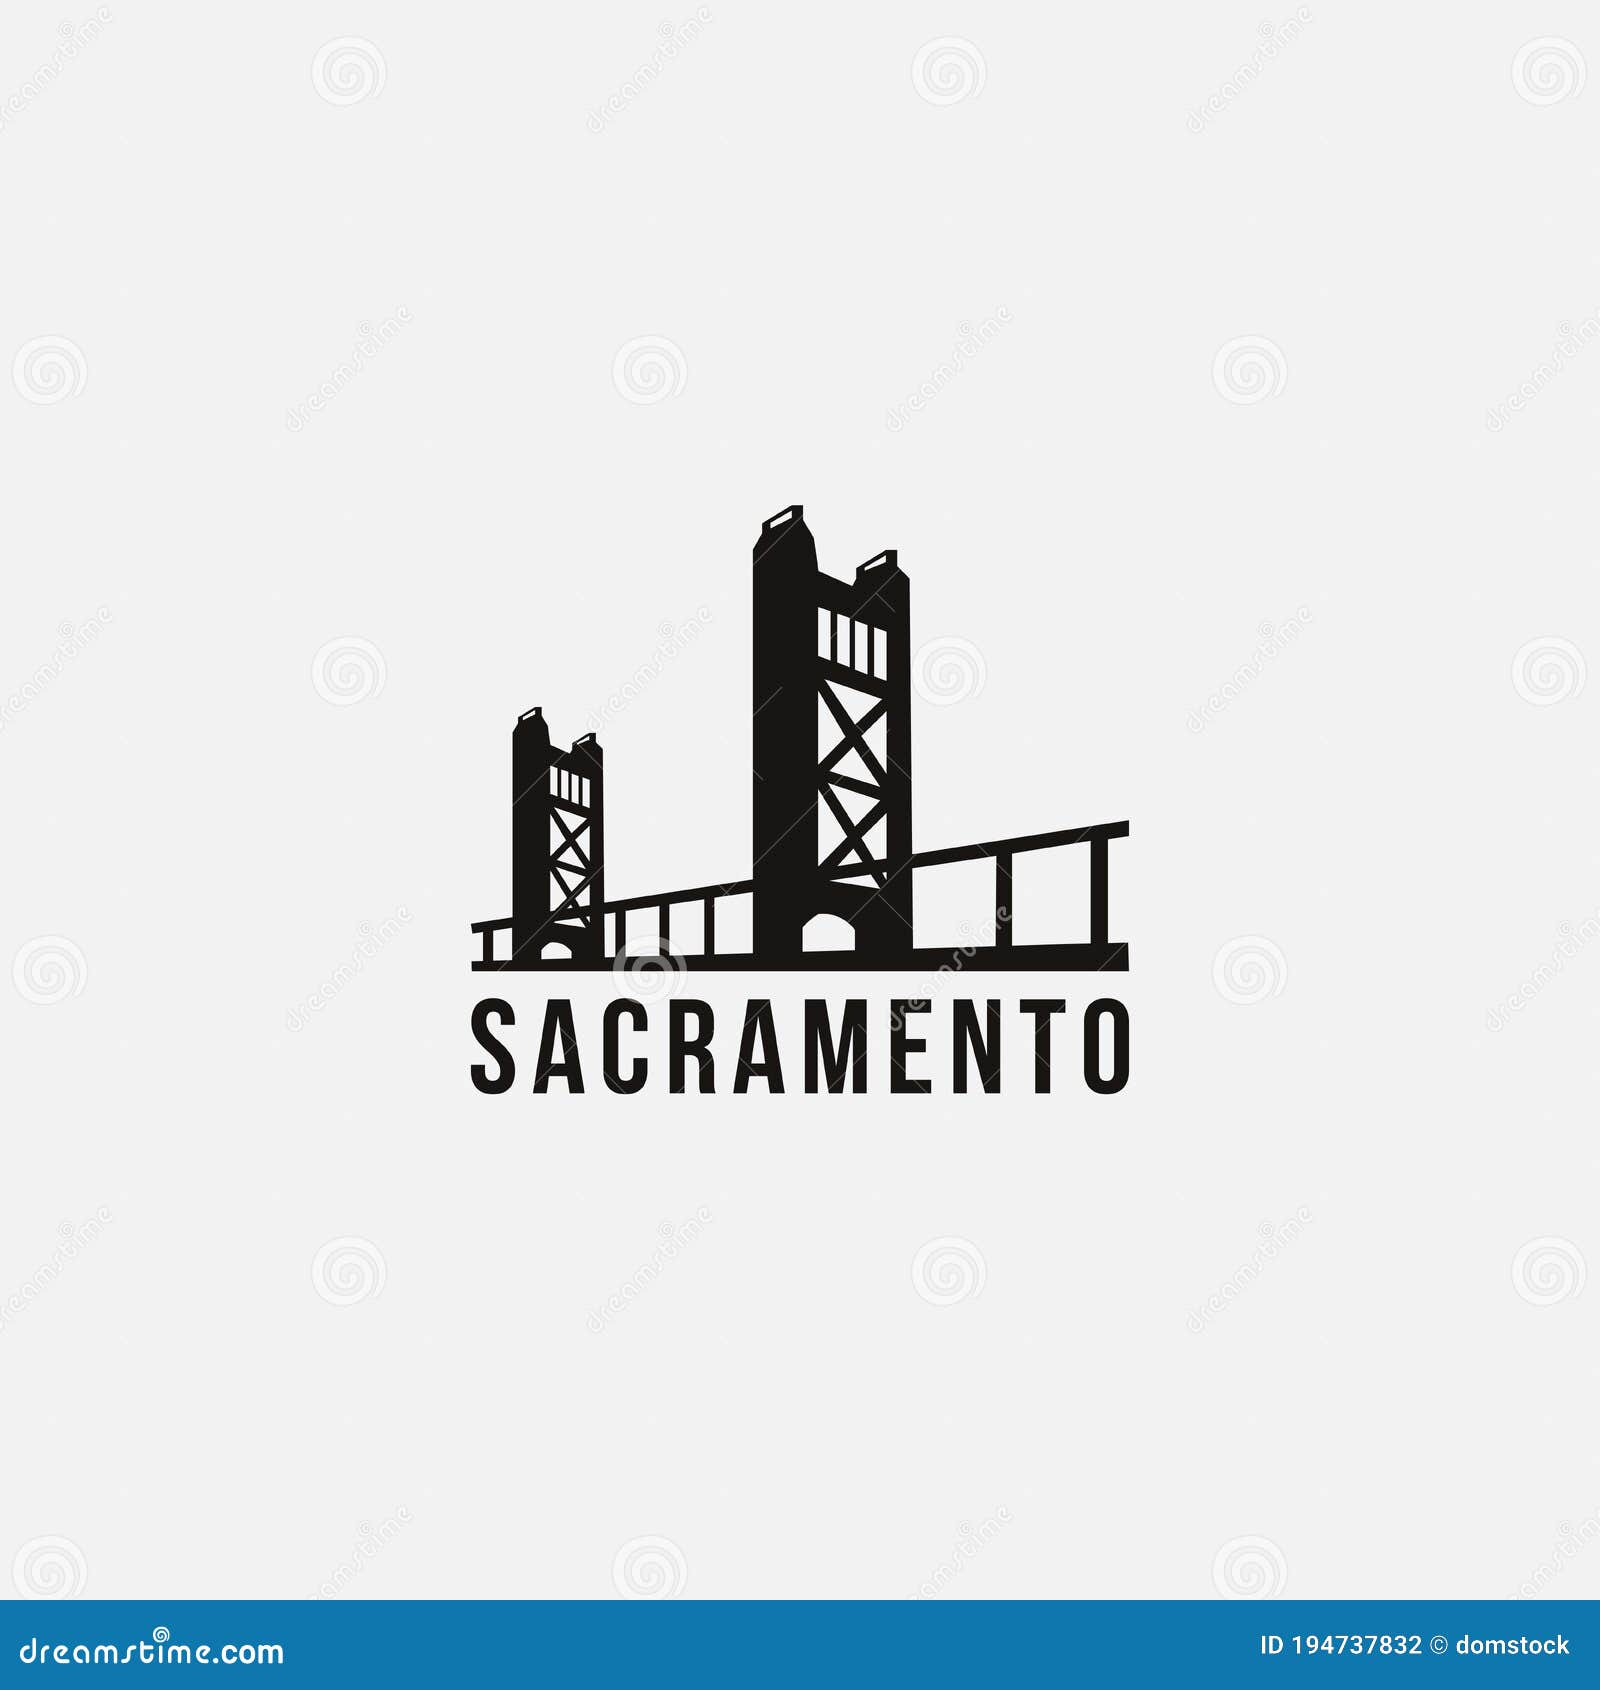 flat minimalist sacramento bridge bridge logo  template